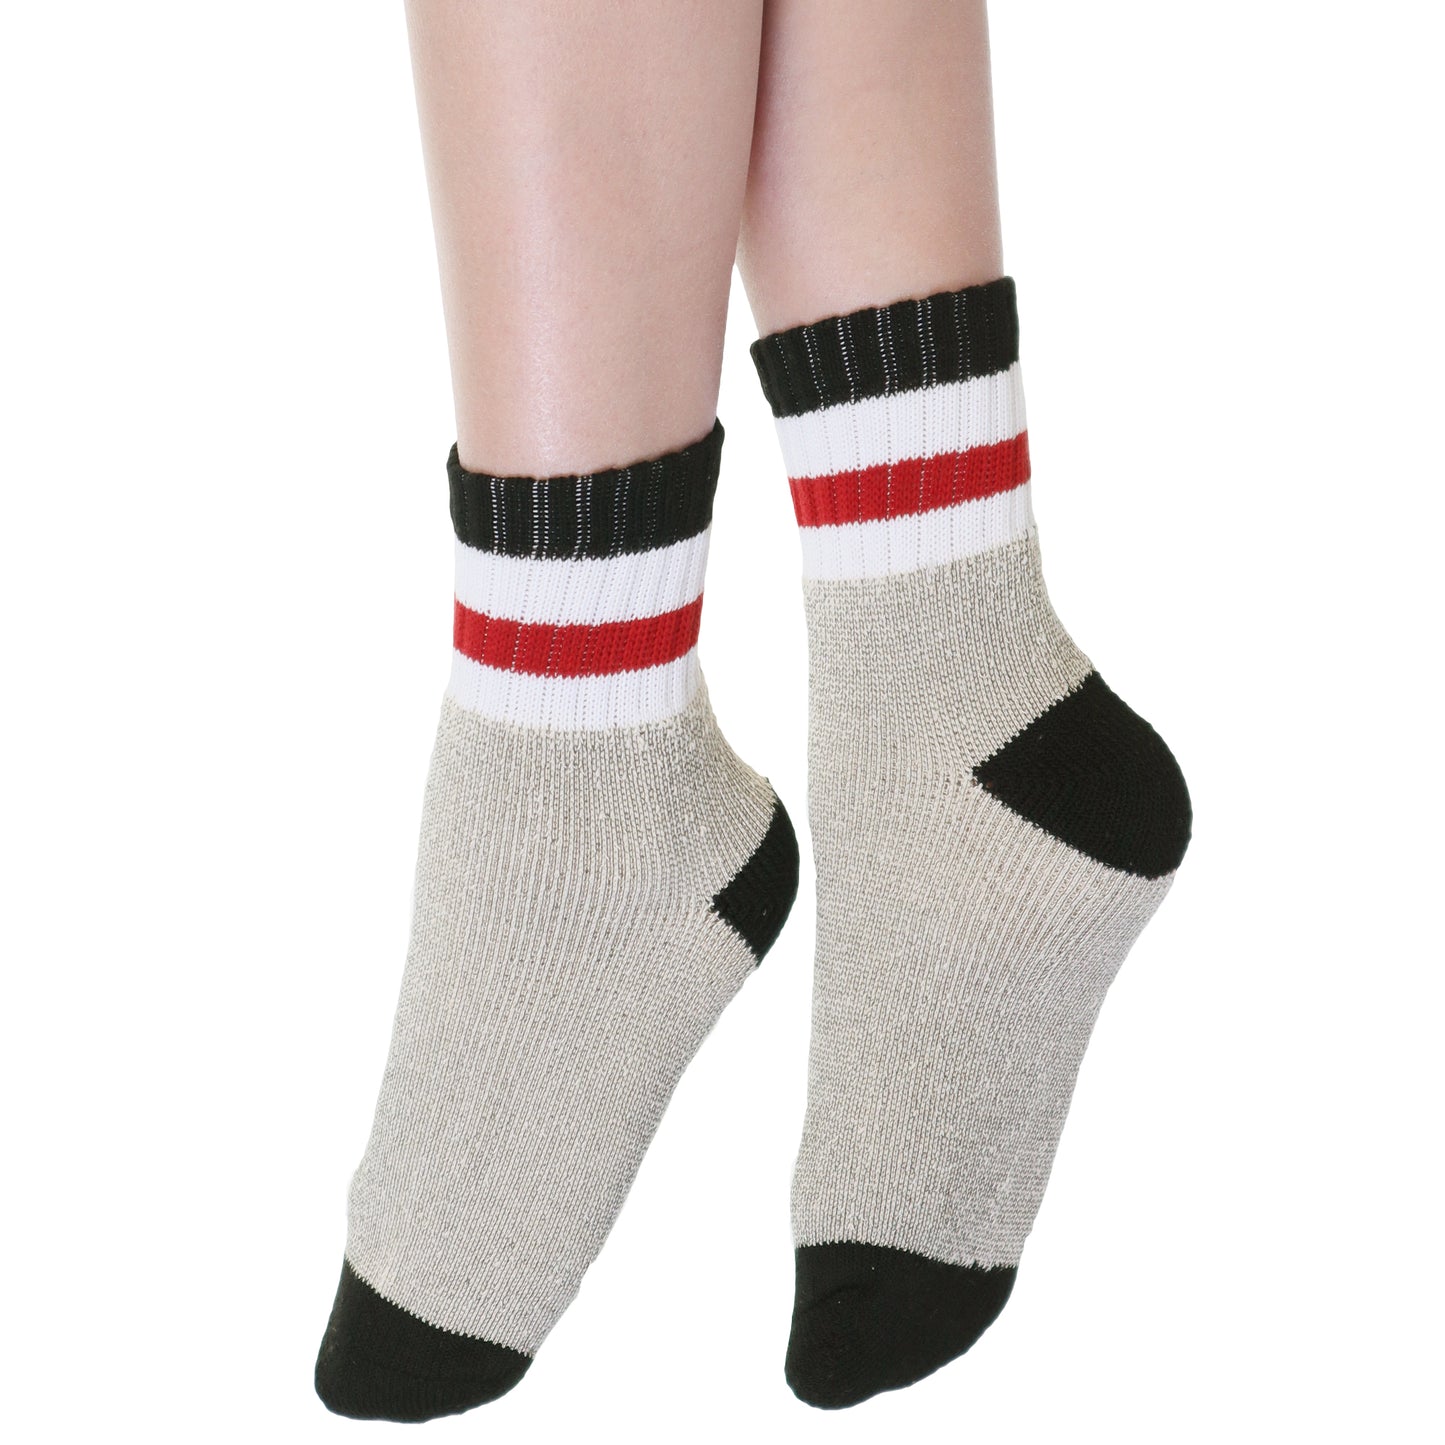 Unisex Quarter Socks with Striped Pattern Cuff (3-Pairs)